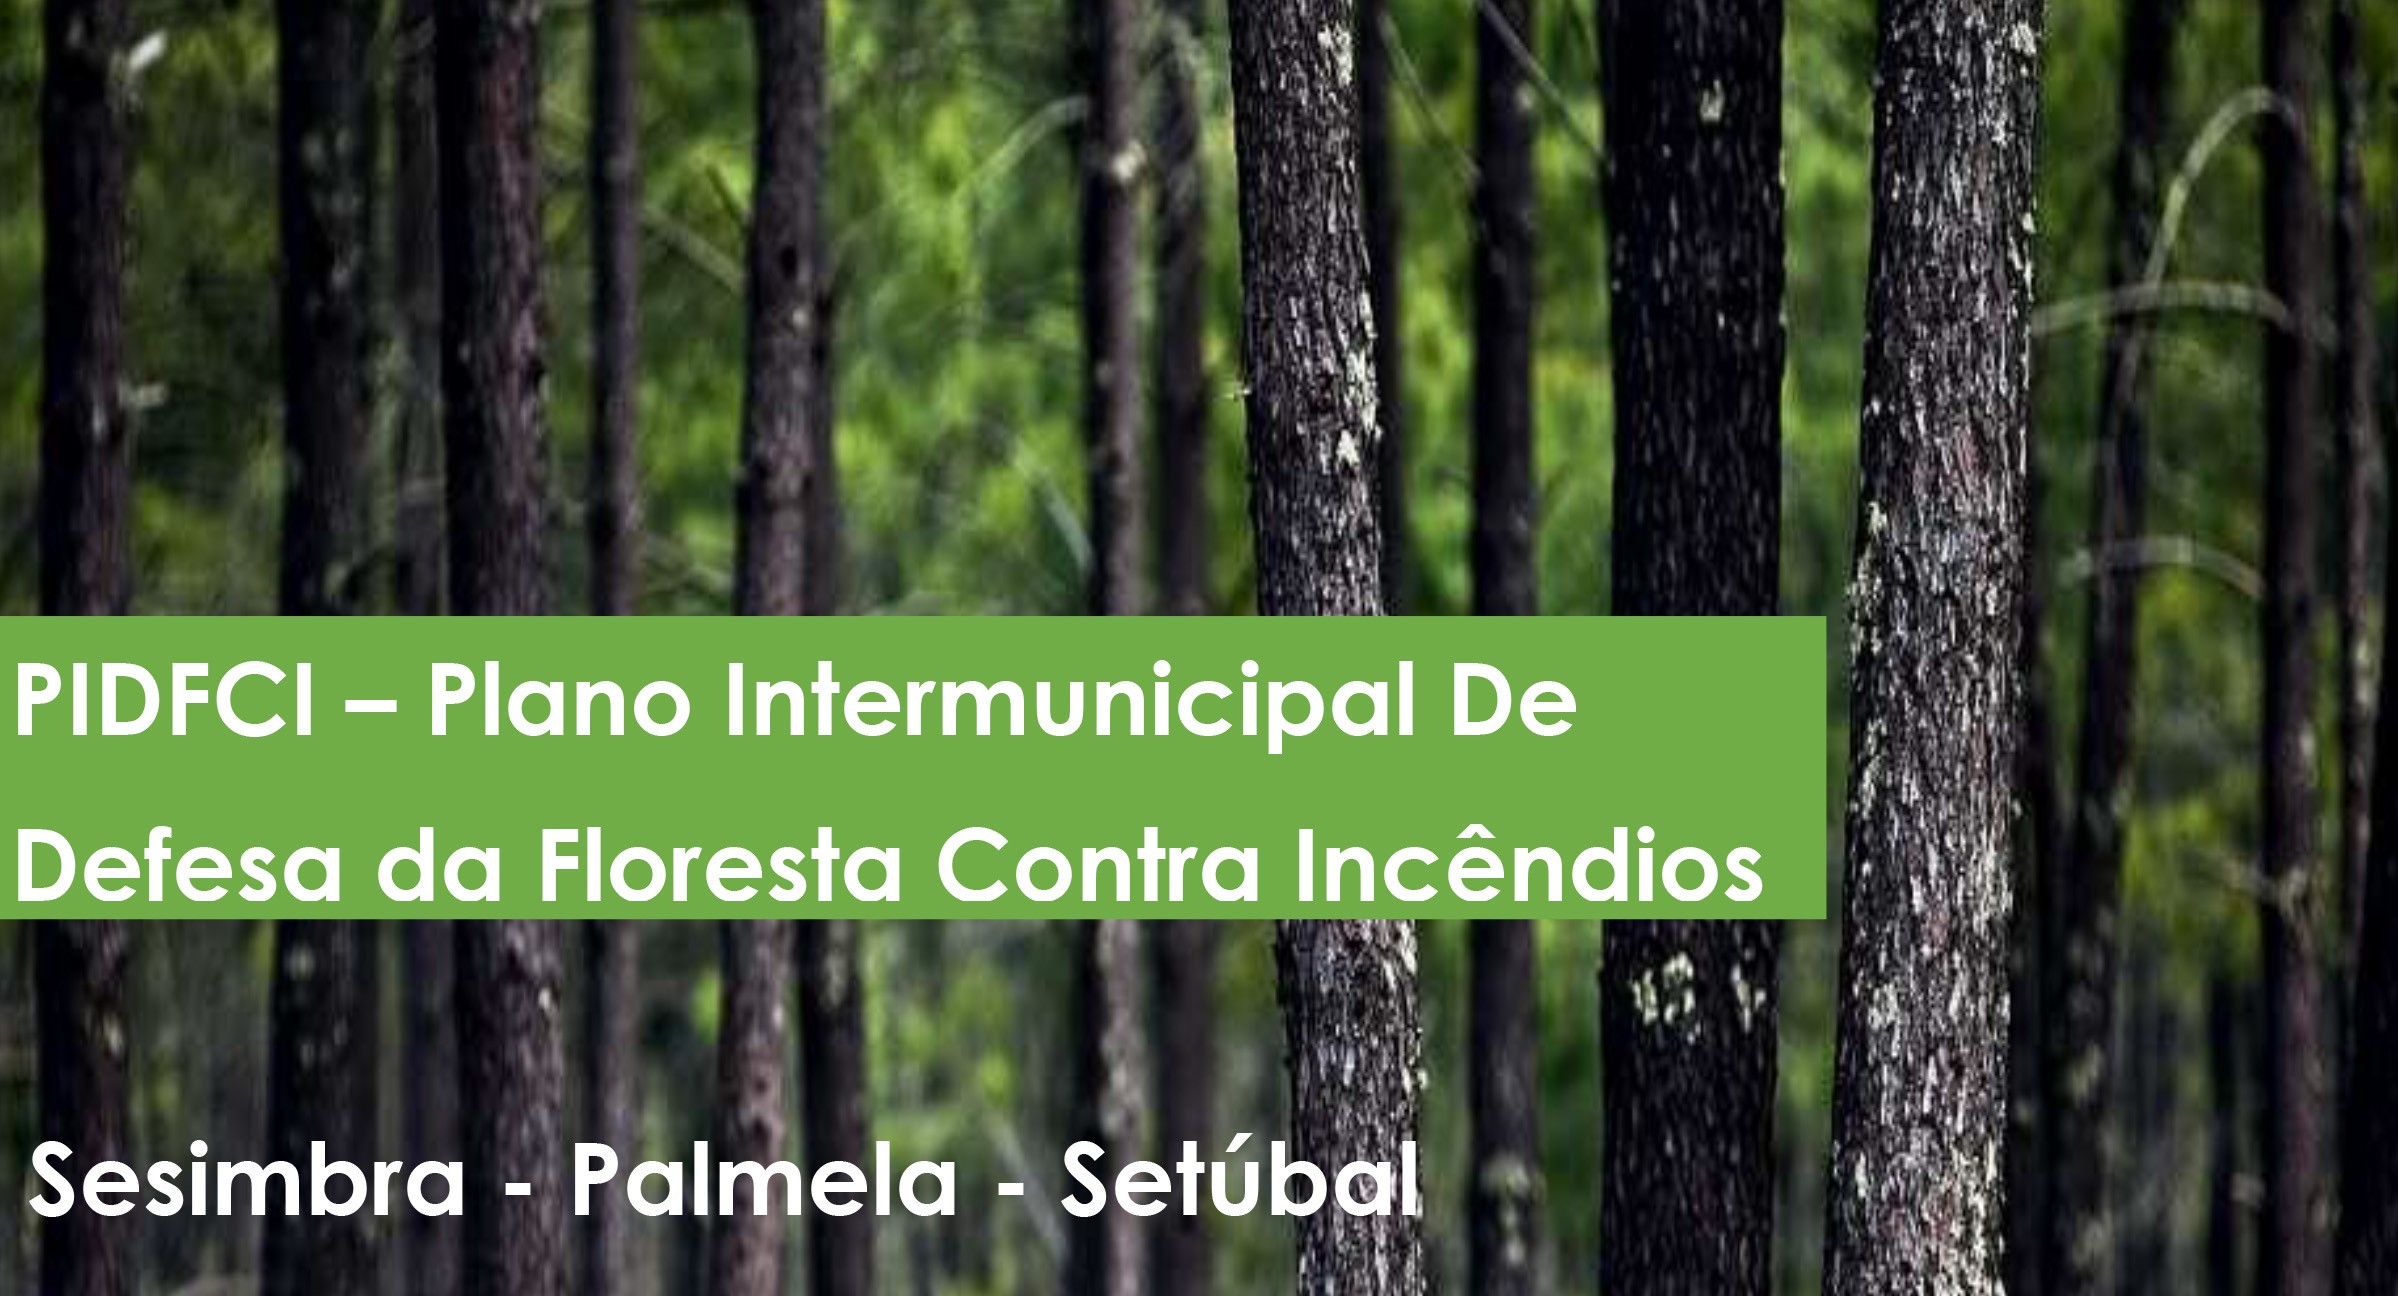 Plano Intermunicipal de Defesa da Floresta: Consulta pública até 26 de setembro